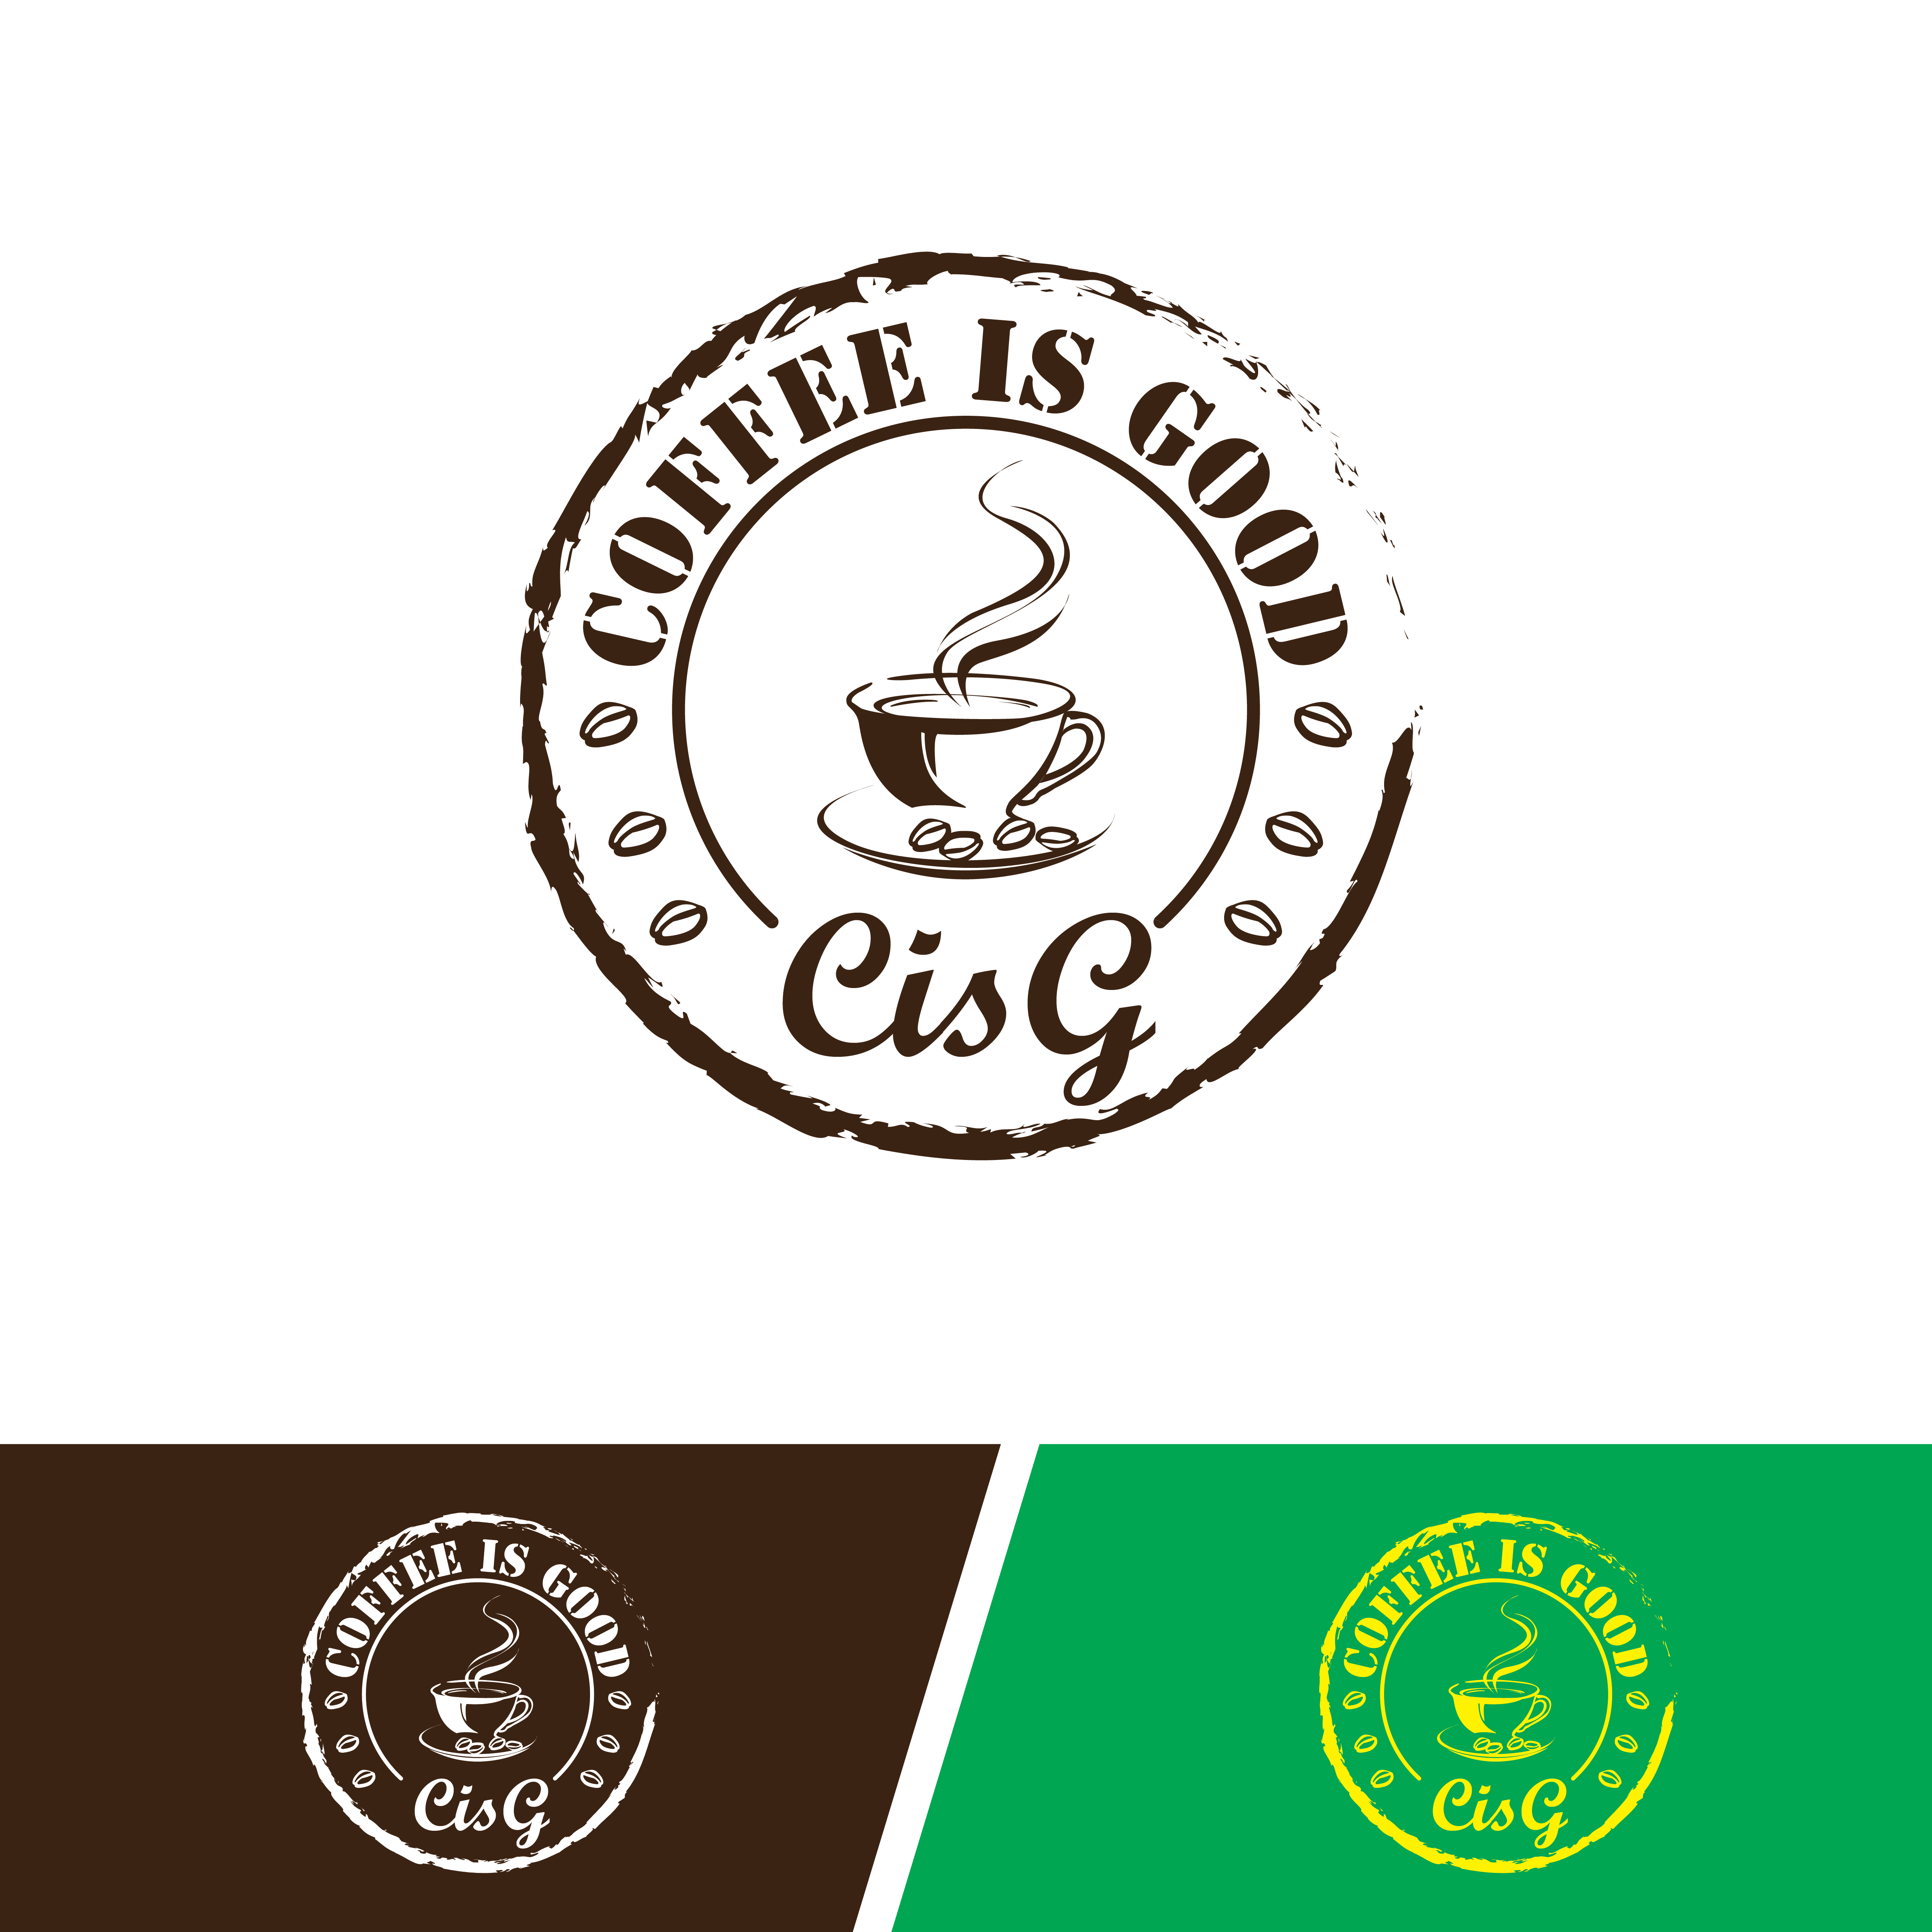 Elegant Playful Logo Design For Cisg Coffee Is Good By Ishaa